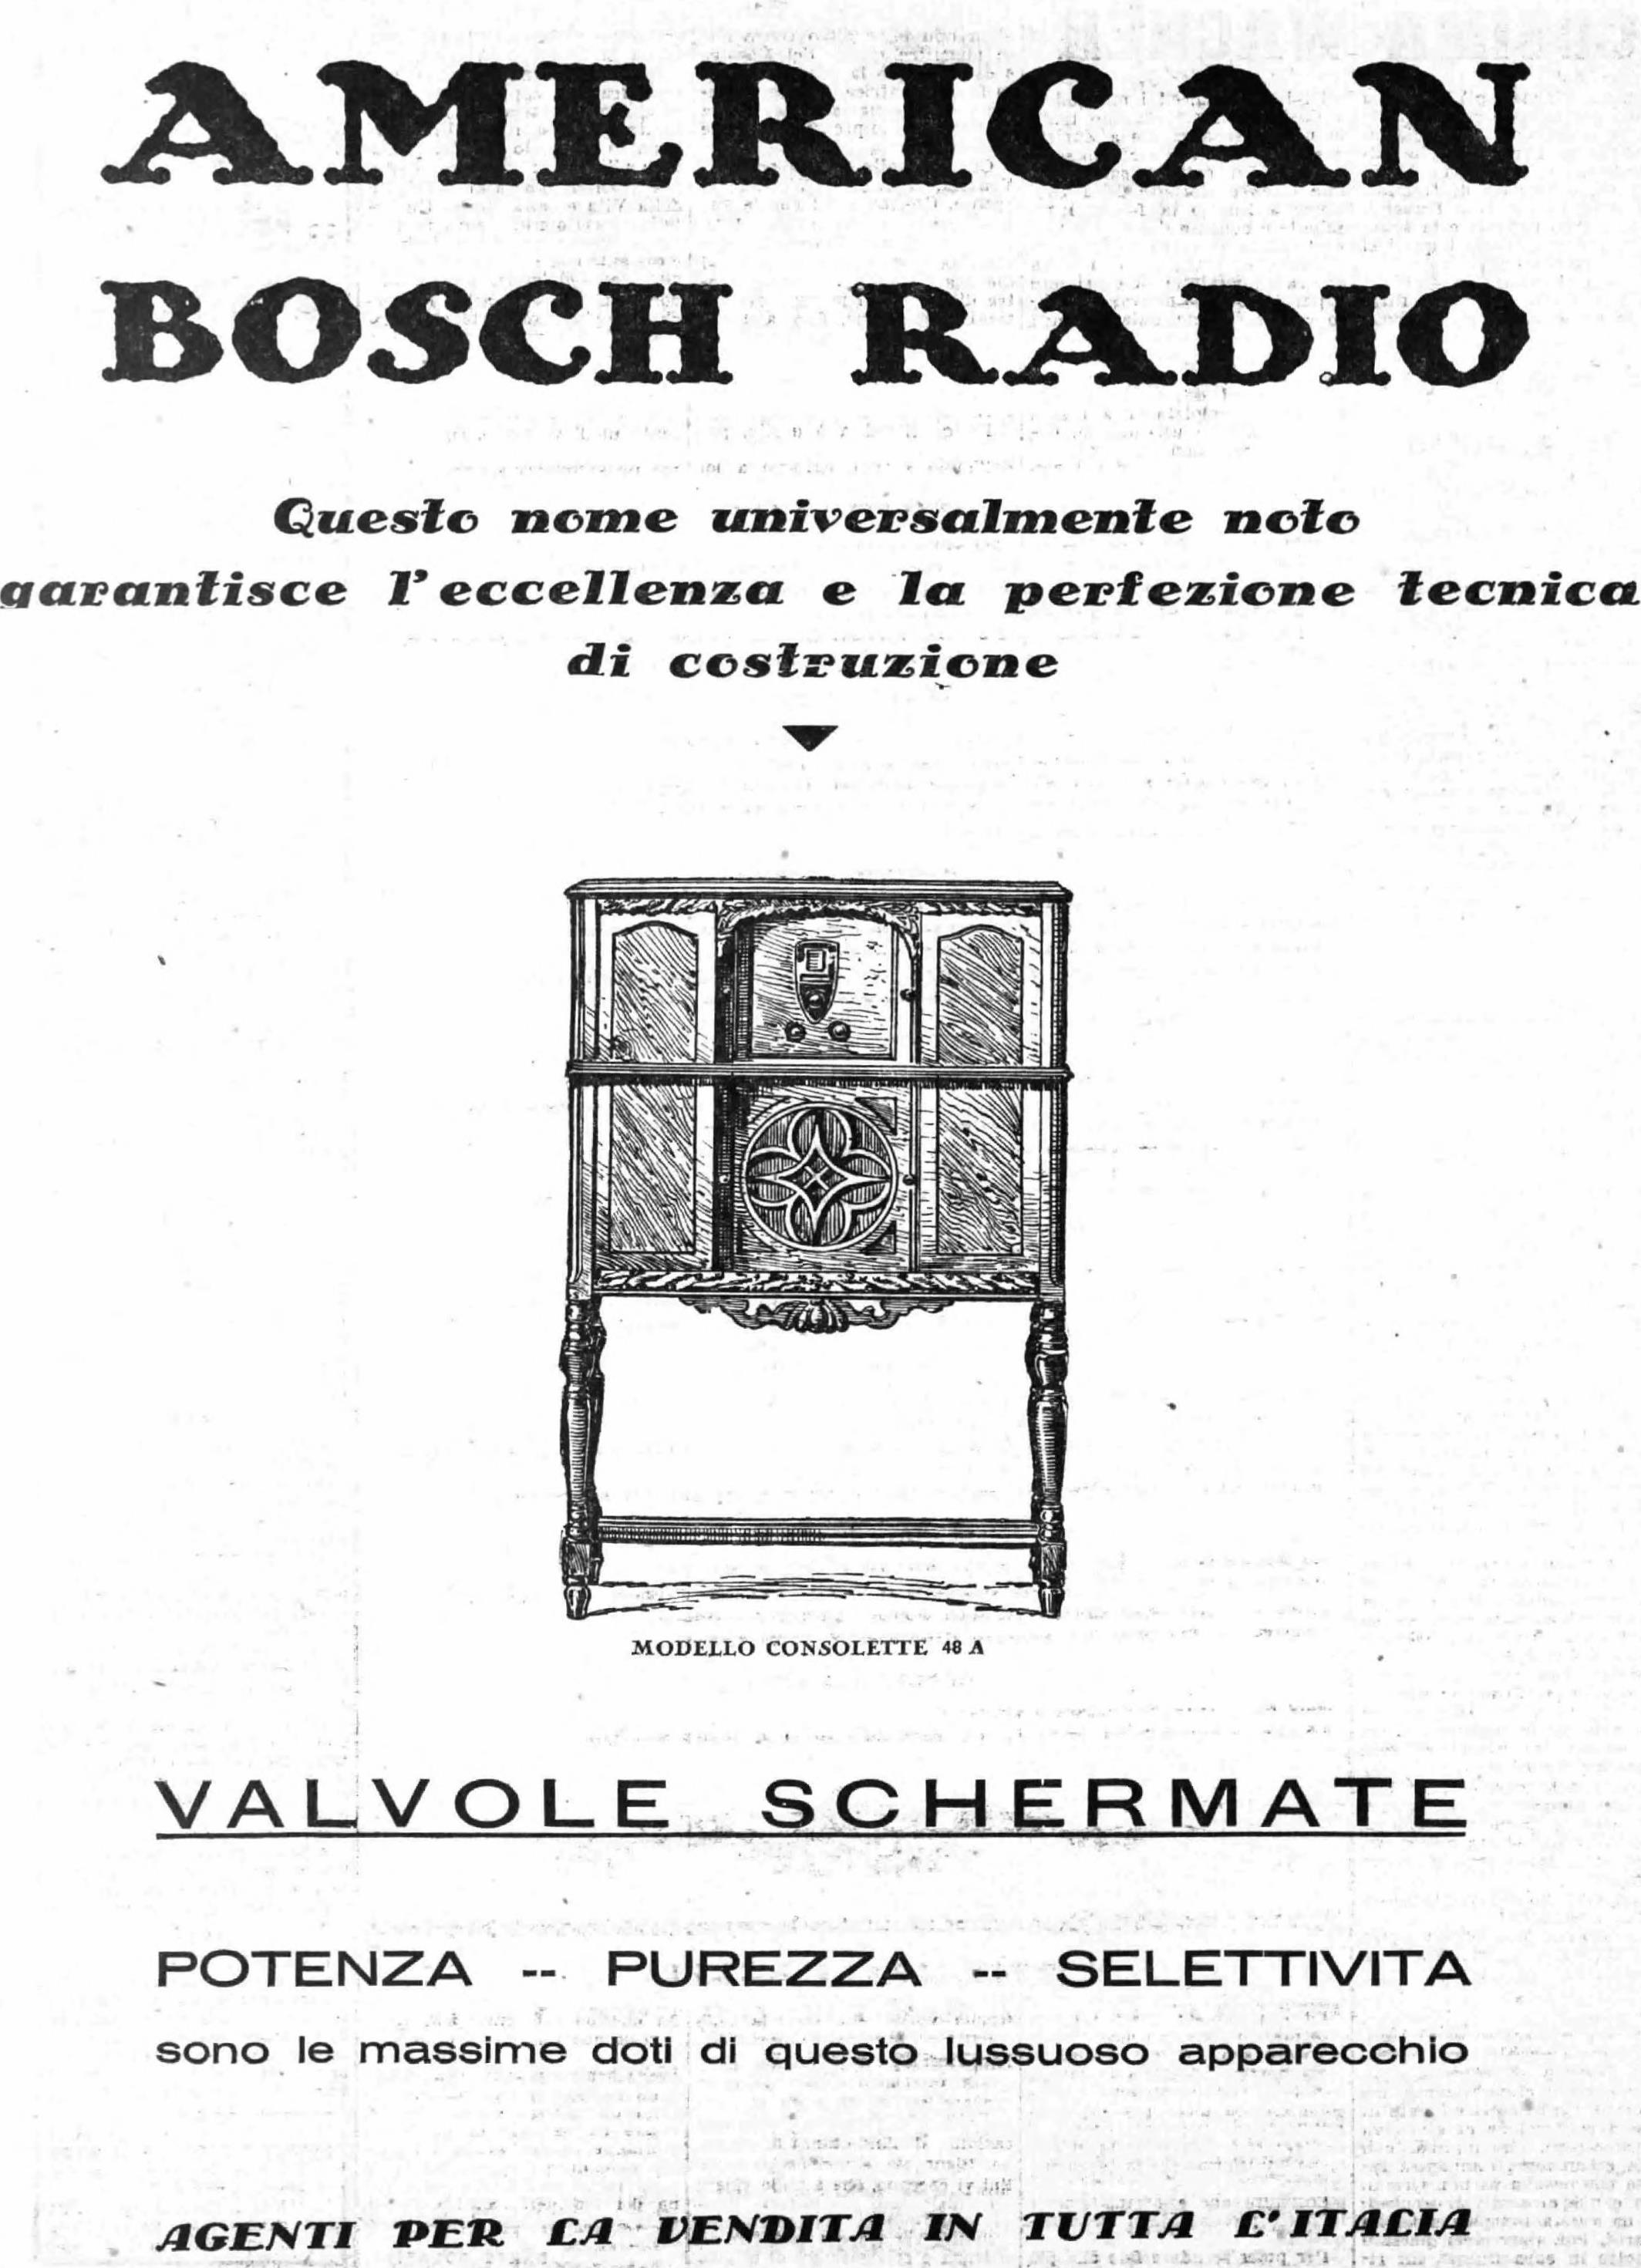 Bosch Radio 1930 43.jpg